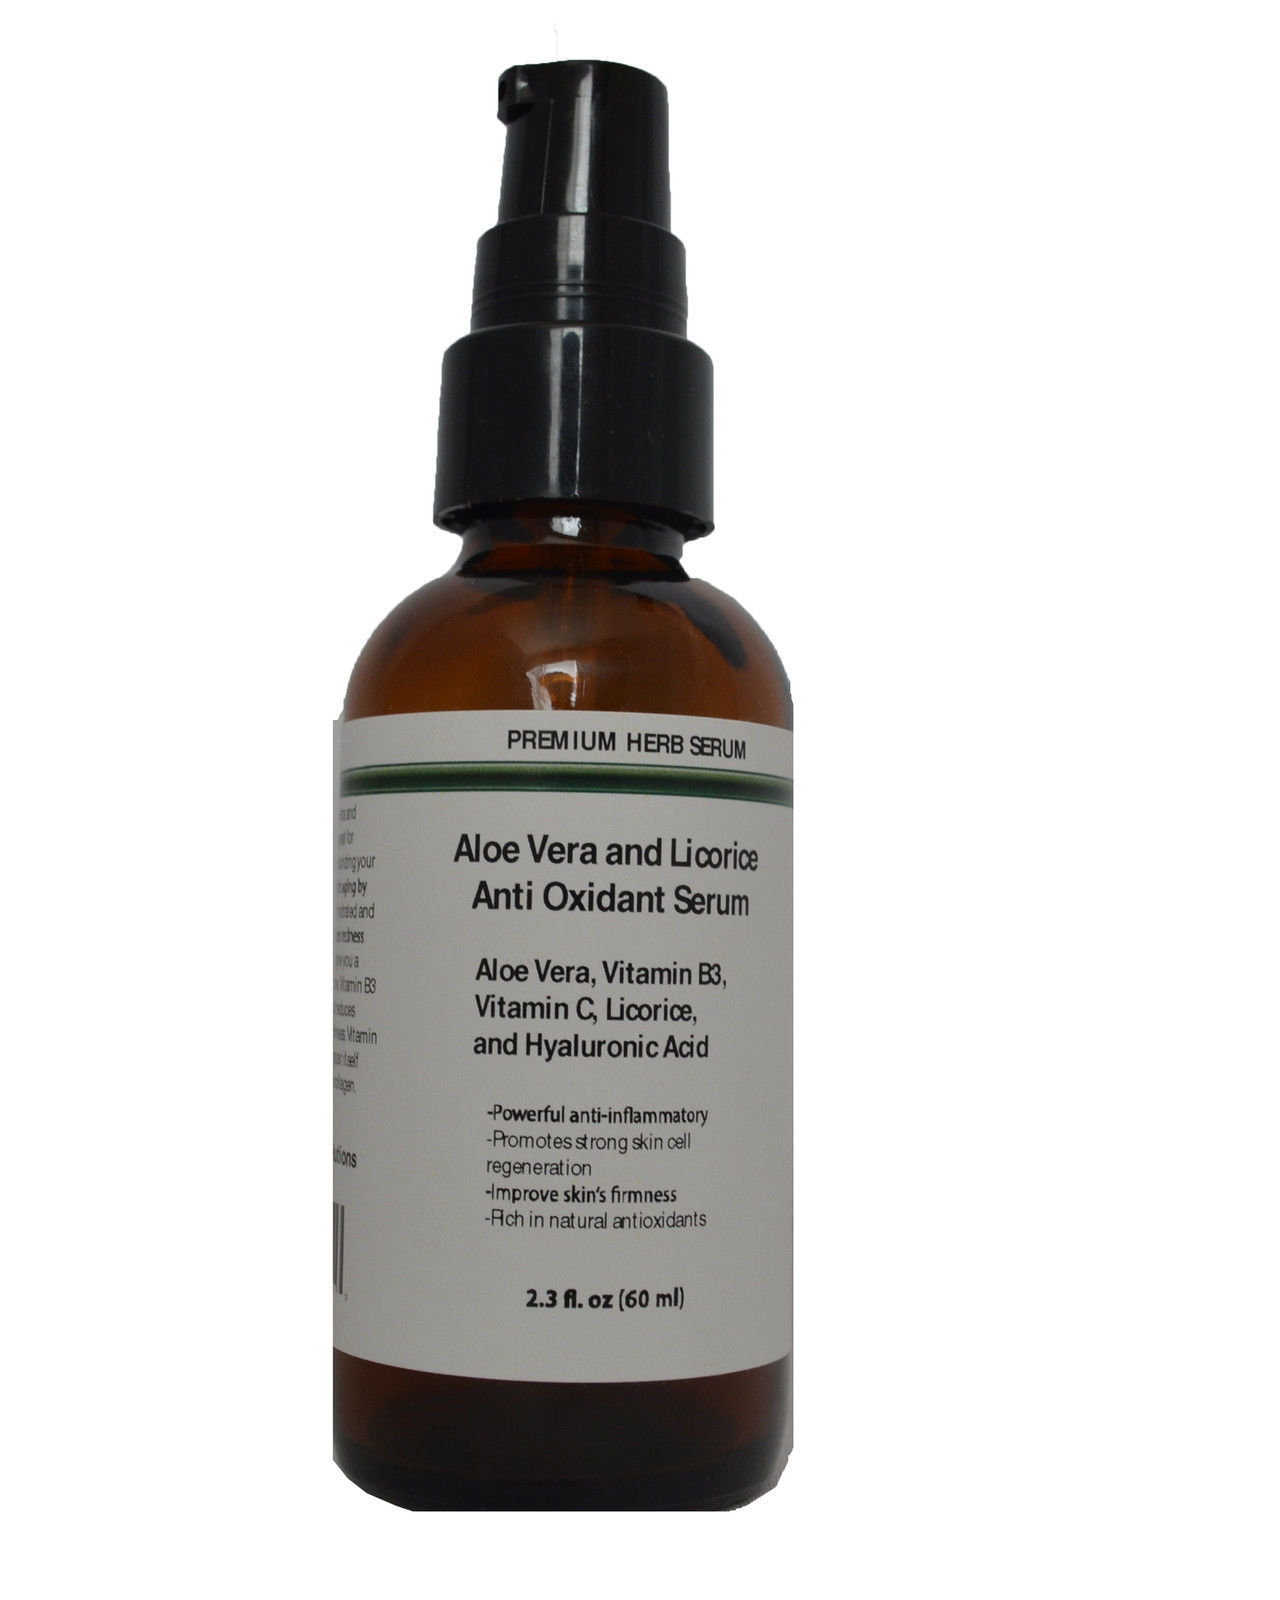 Antioxidant Serum with Aloe Vera,B3,Vitamin C,Licorice,and Hyaluronic Acid 2.3oz - $28.66